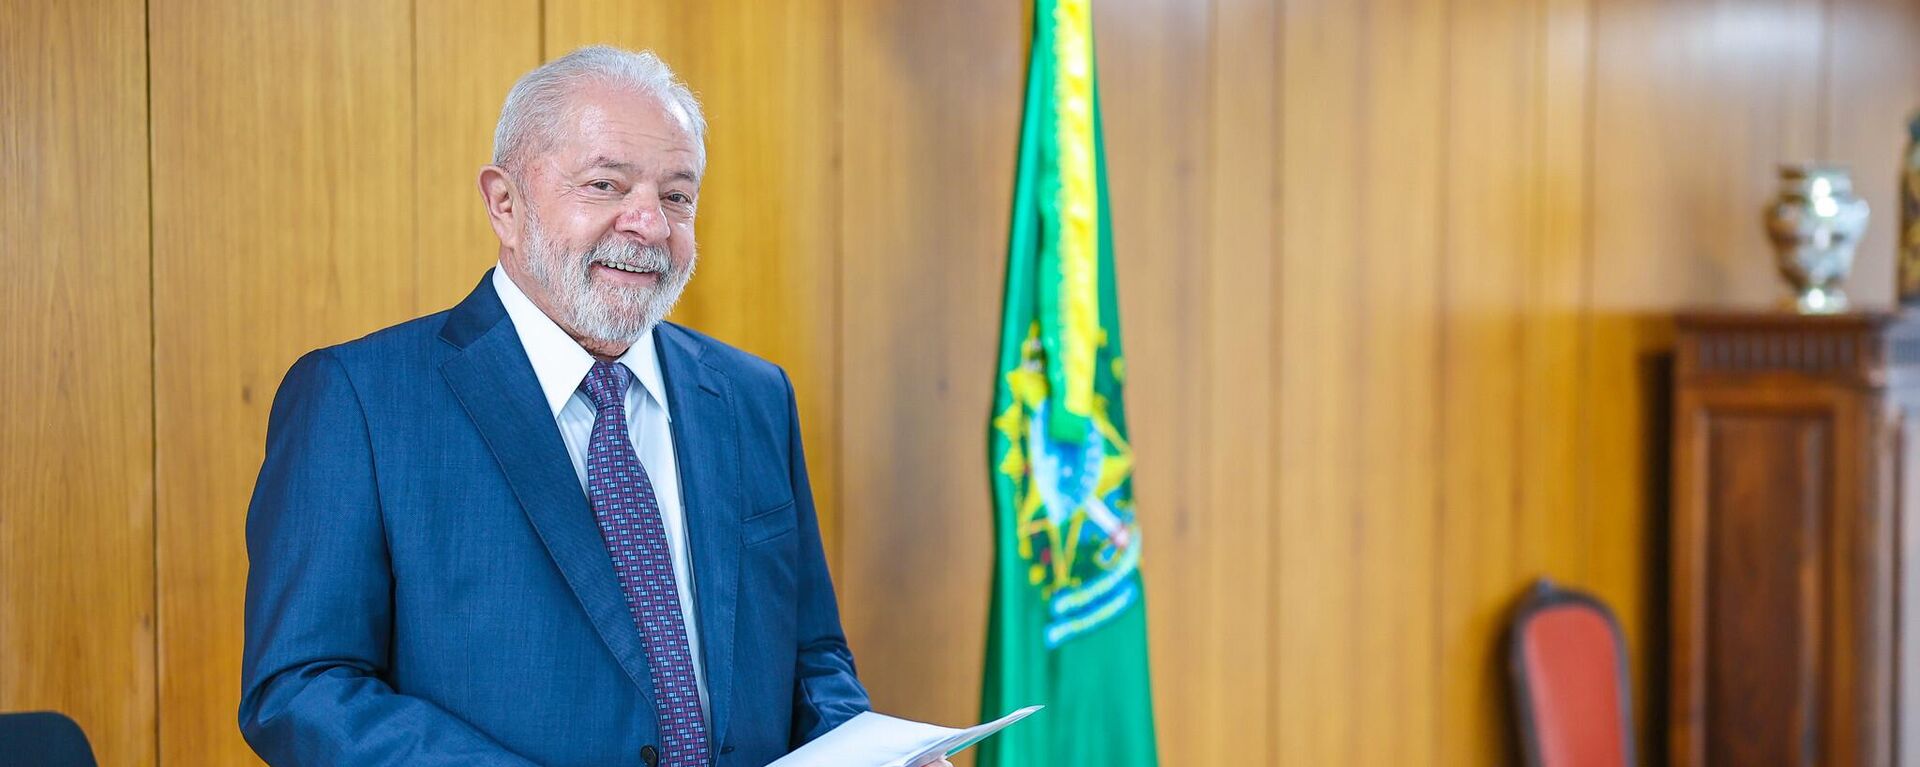 O presidente Luiz Inácio Lula da Silva no gabinete do Palácio do Planalto. Brasília, Brasil, 4 de janeiro de 2023 - Sputnik Brasil, 1920, 23.02.2023